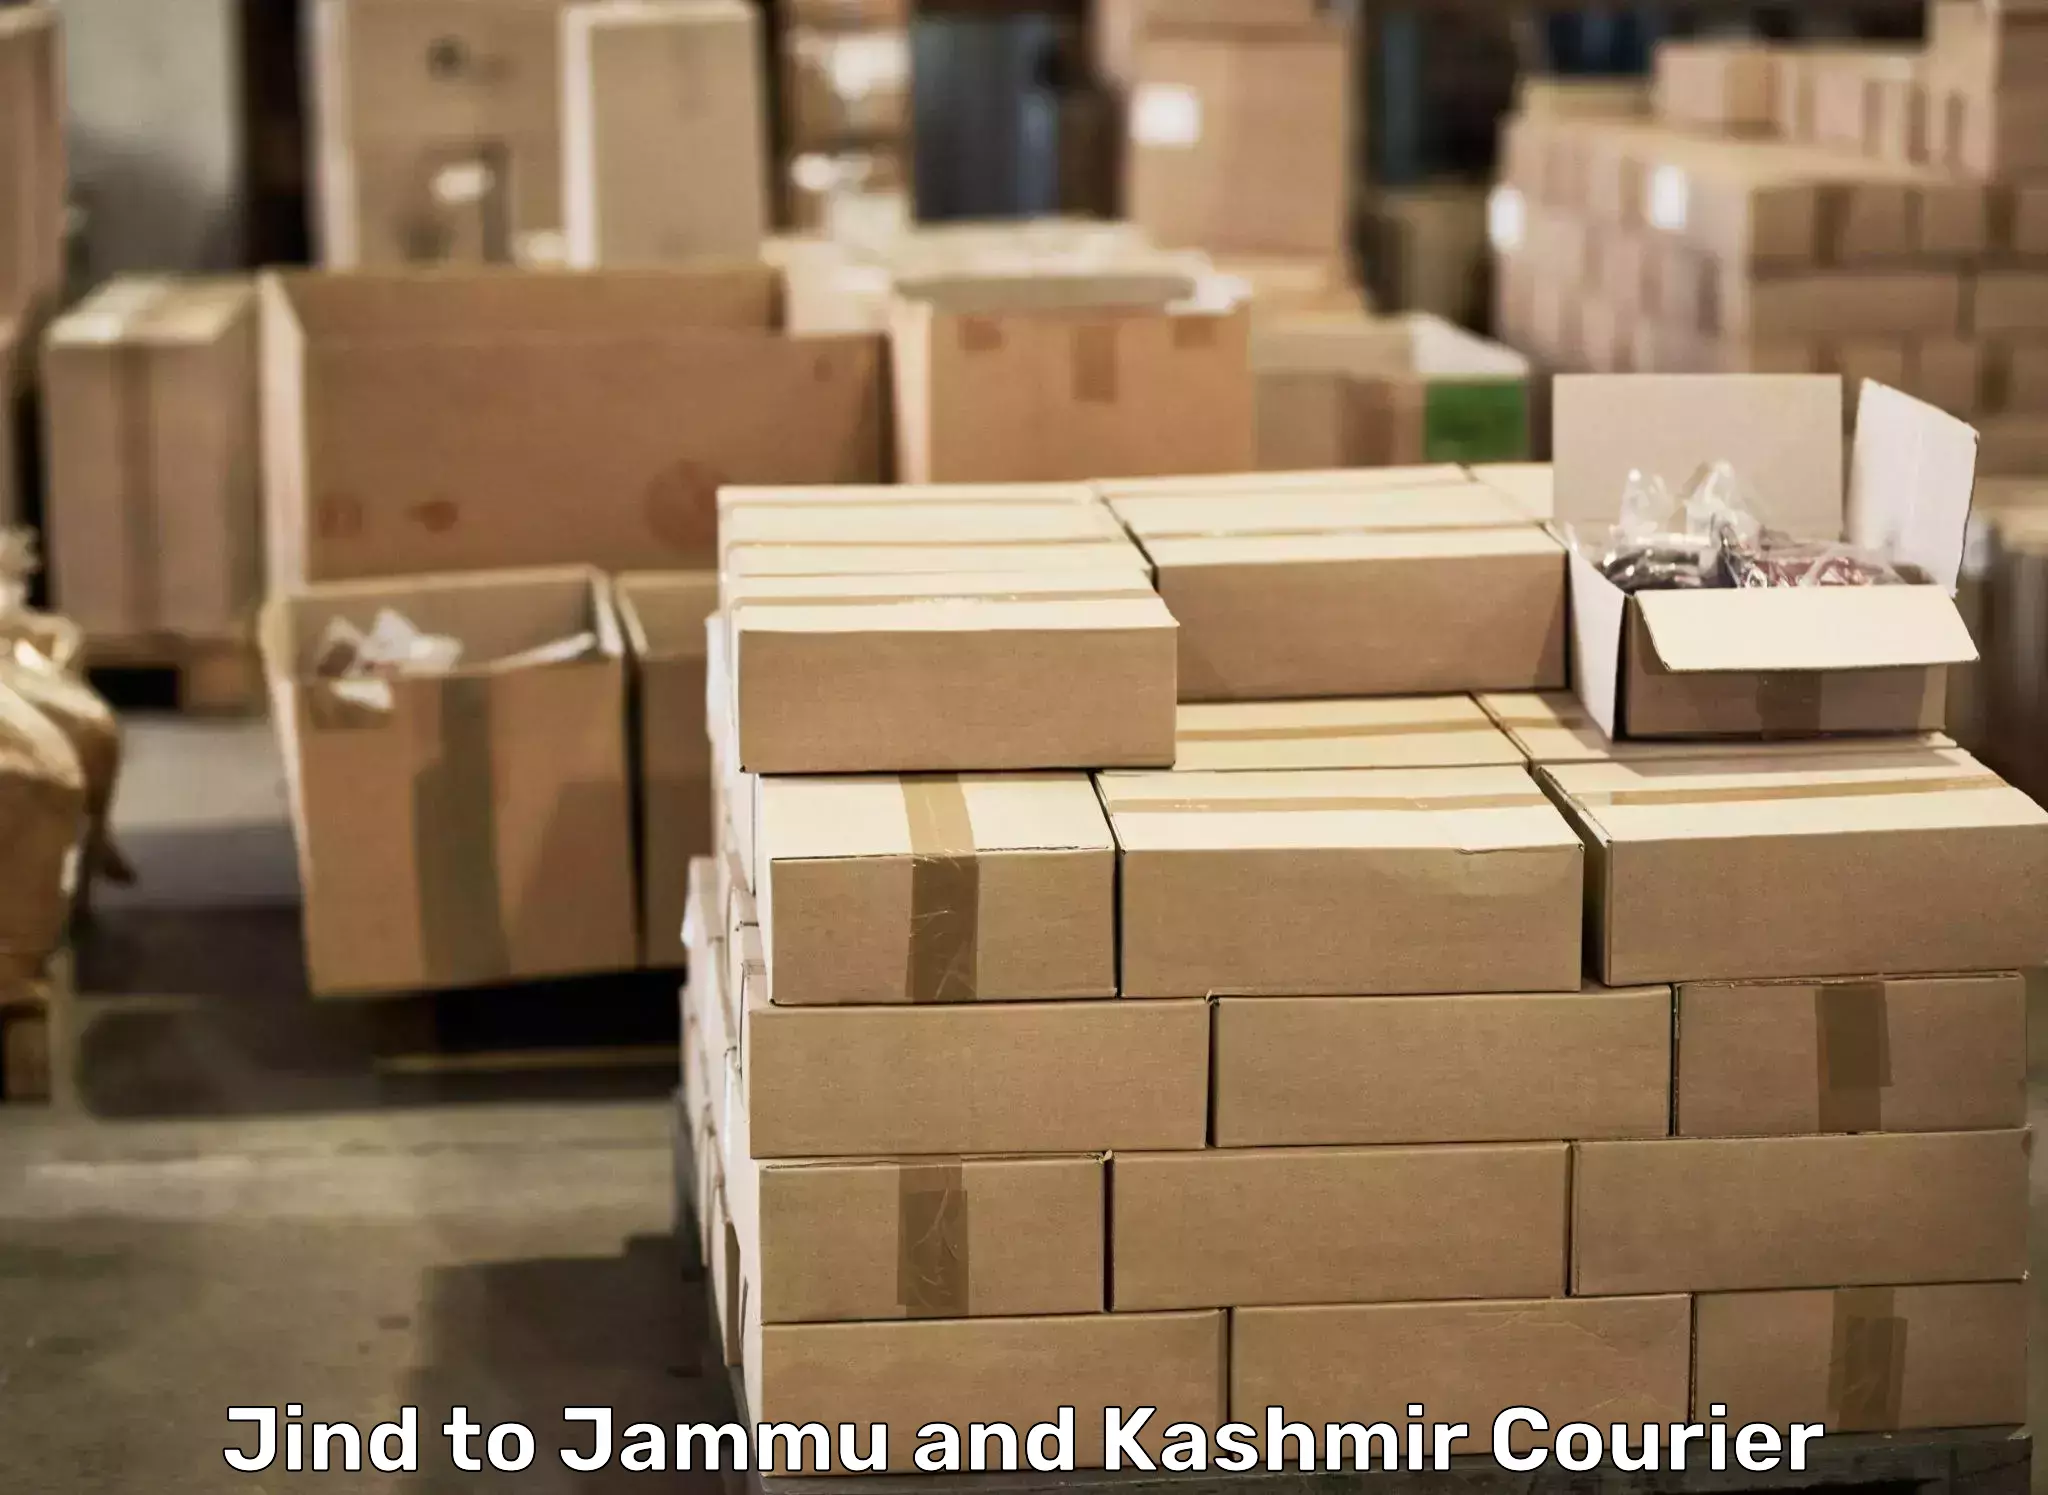 Moving and storage services Jind to Srinagar Kashmir